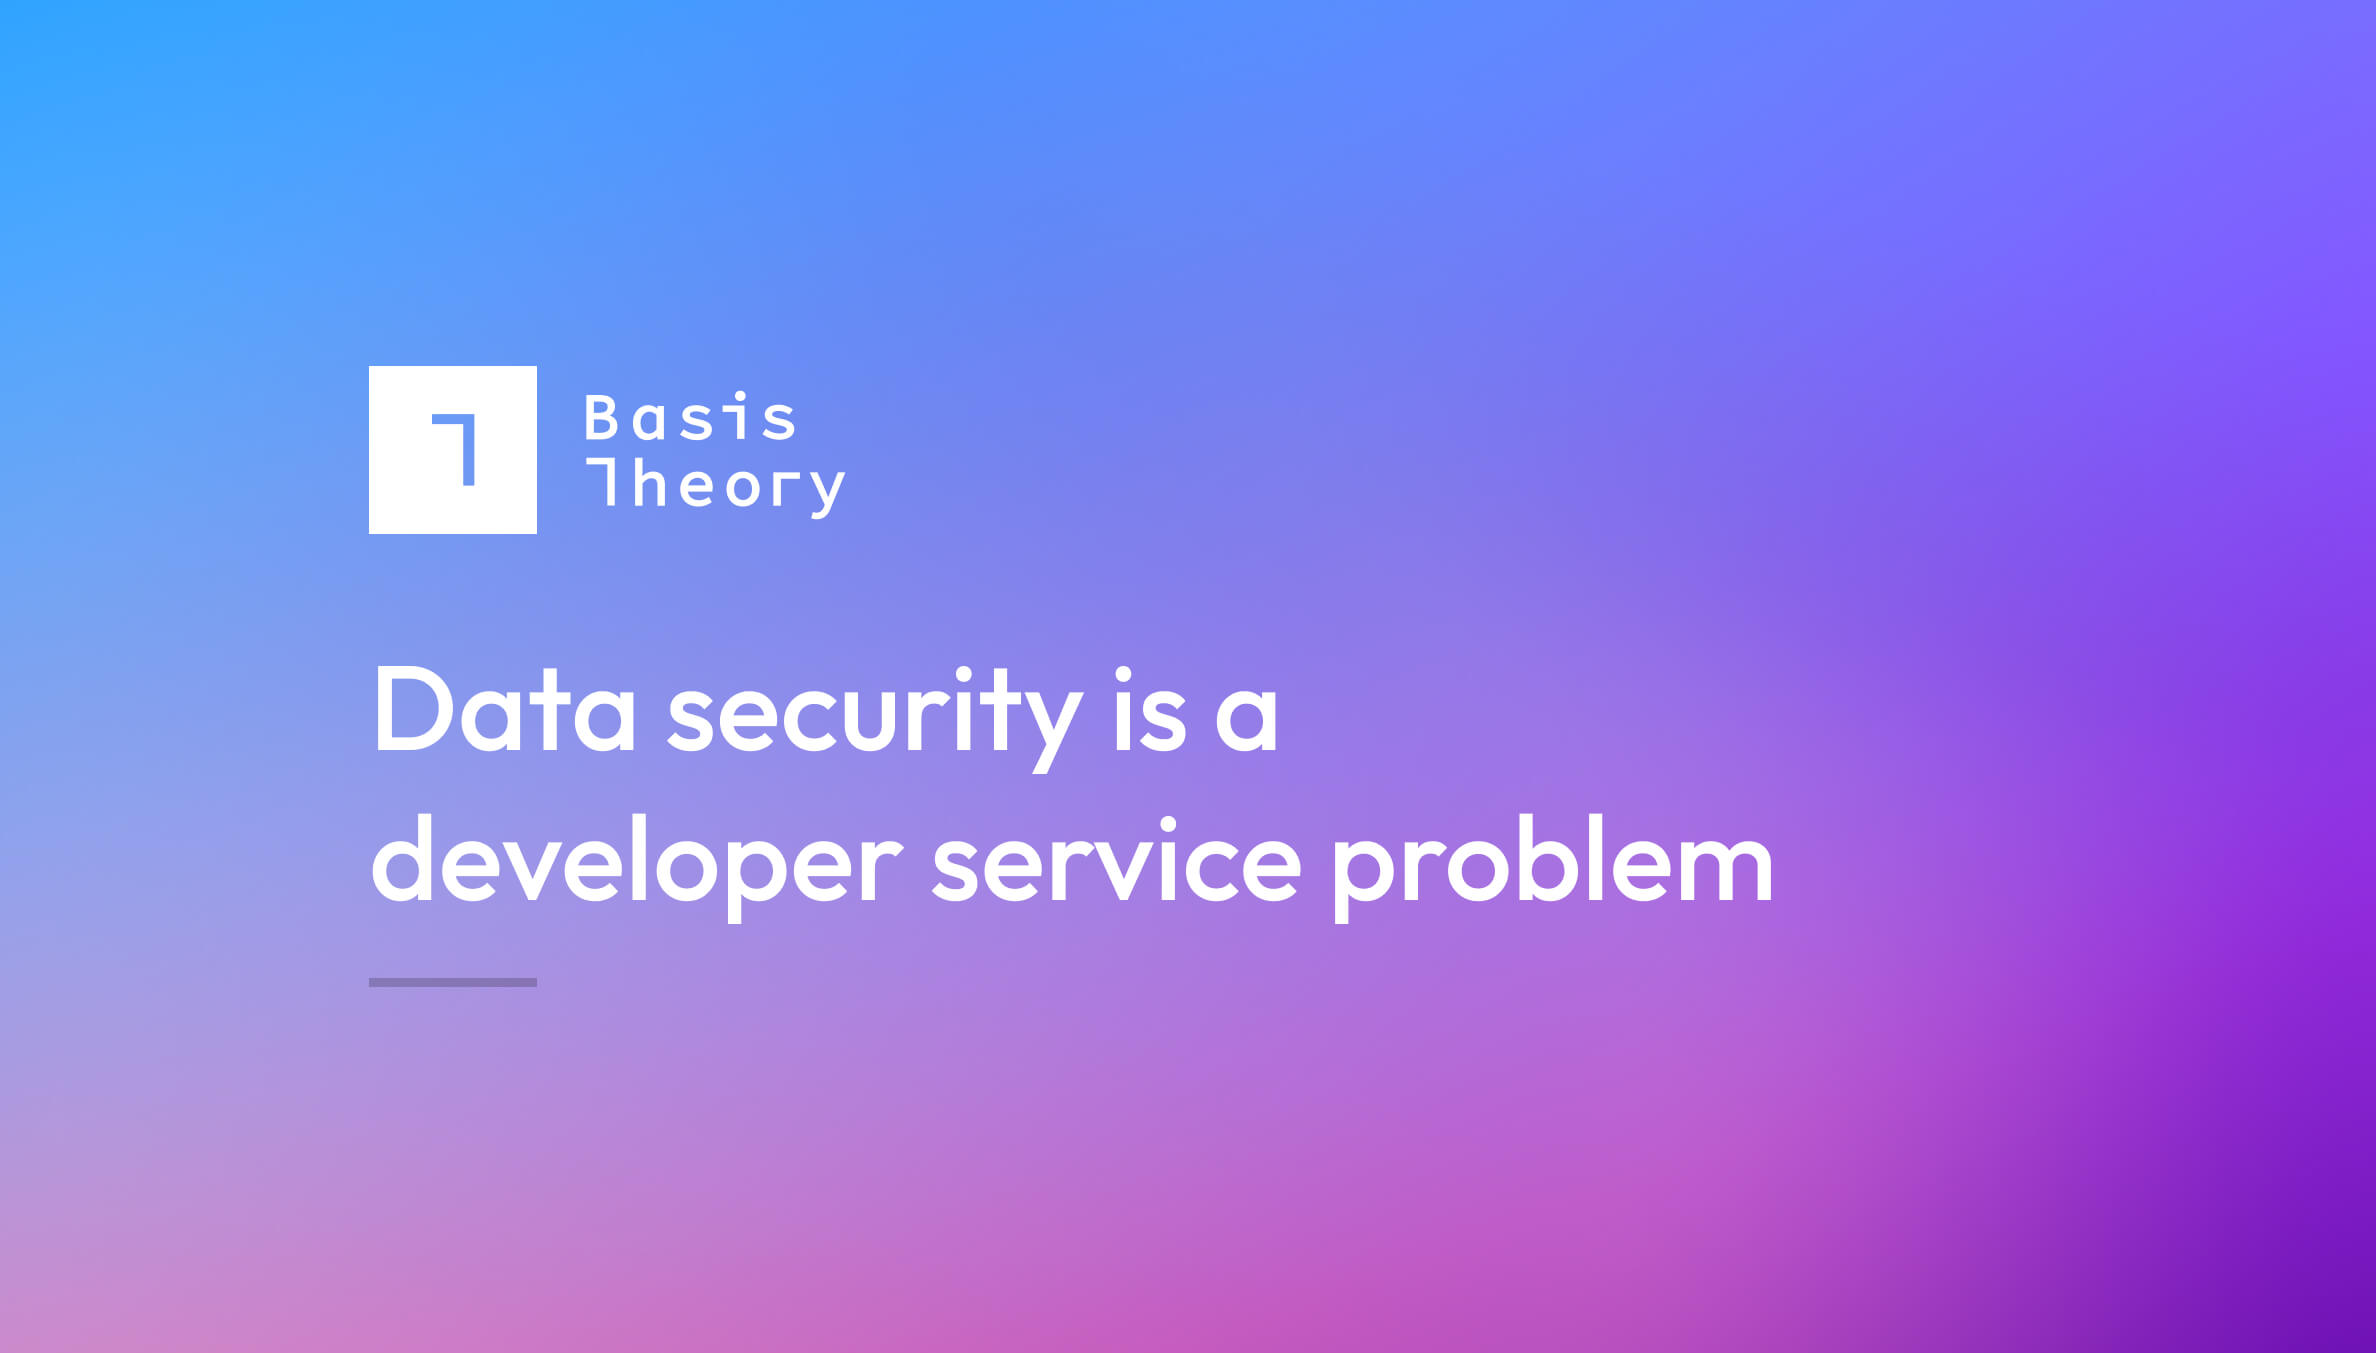 Data security is a developer service problem